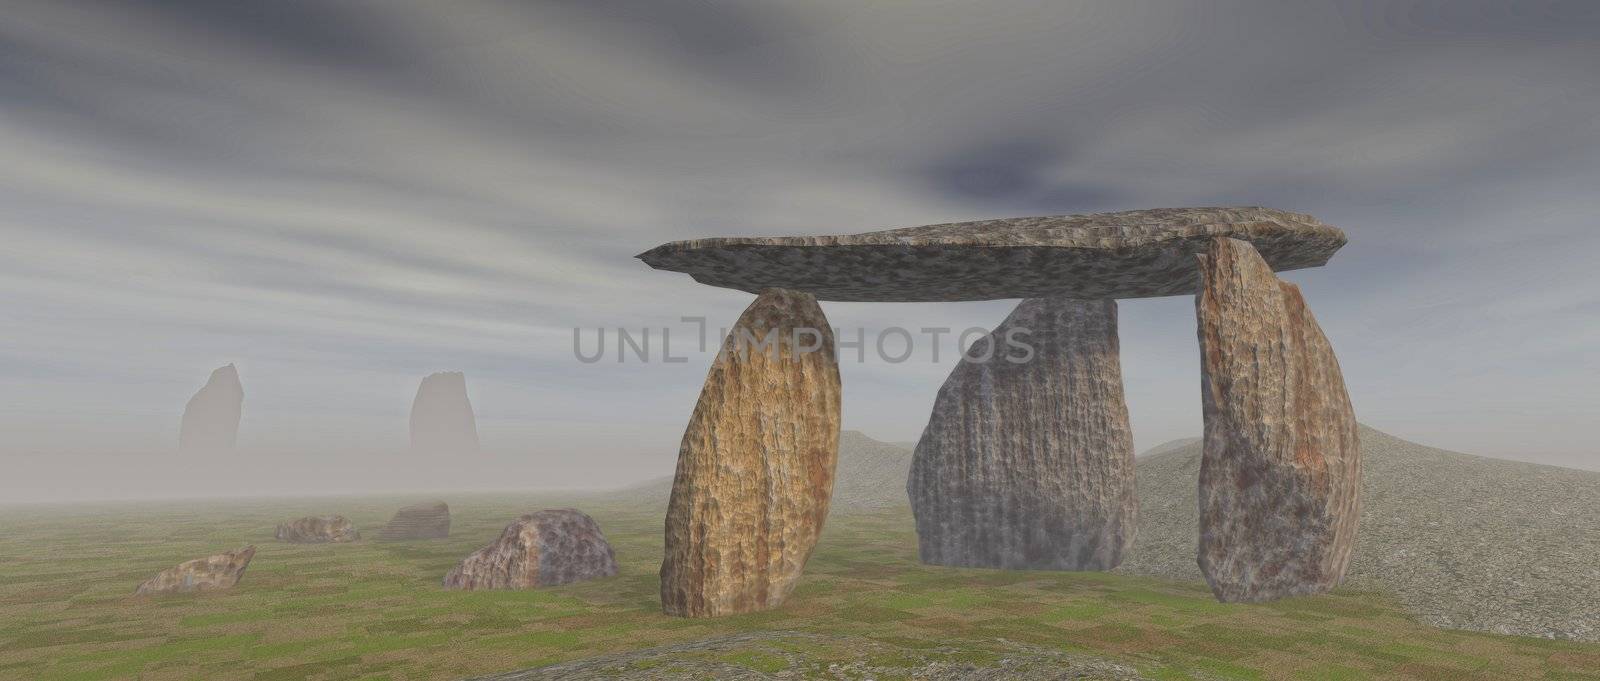 3D render of a dolmen landscape under a gray sky